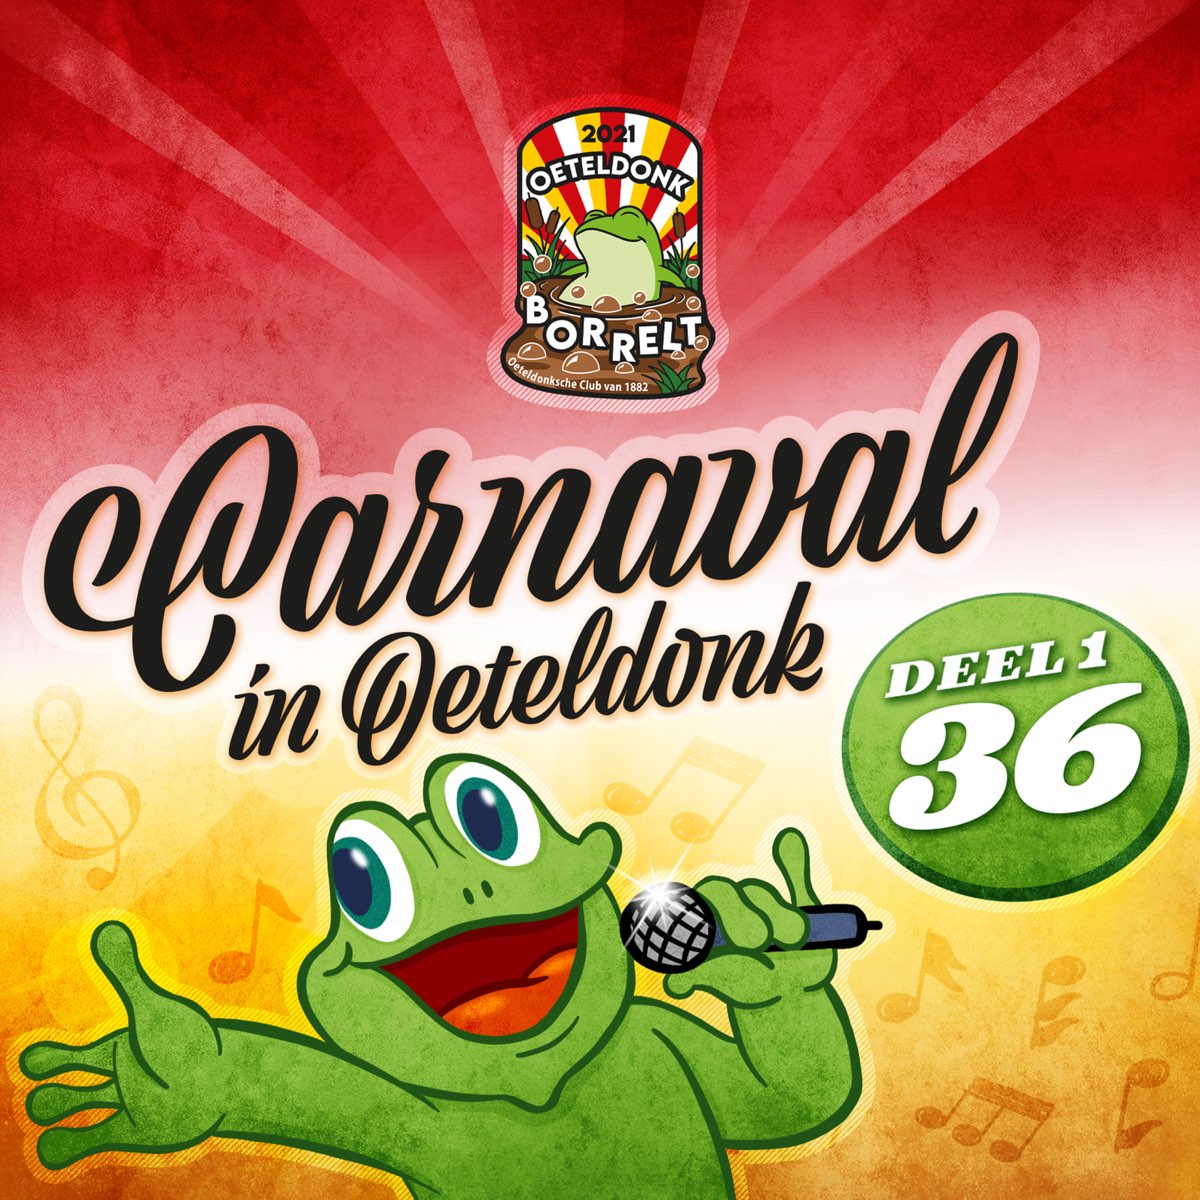 上的Verschillende artiesten《Carnaval In Oeteldonk deel 36 1)》